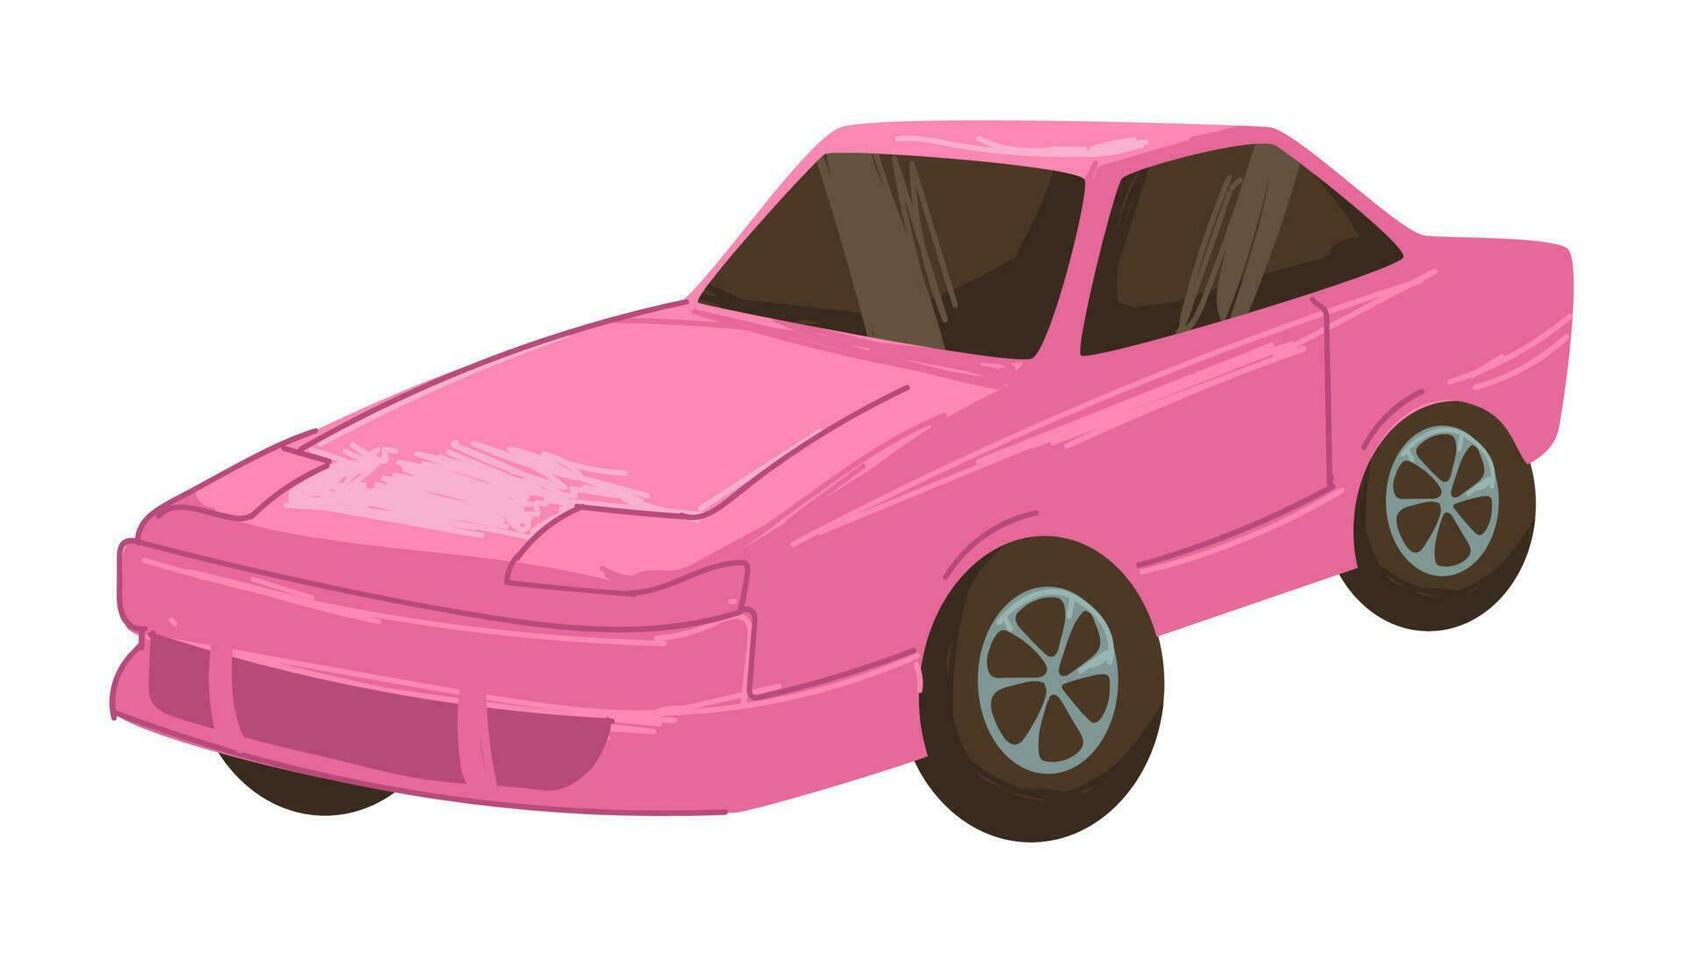 retro coche desde 2000, moderno transporte rosado auto vector